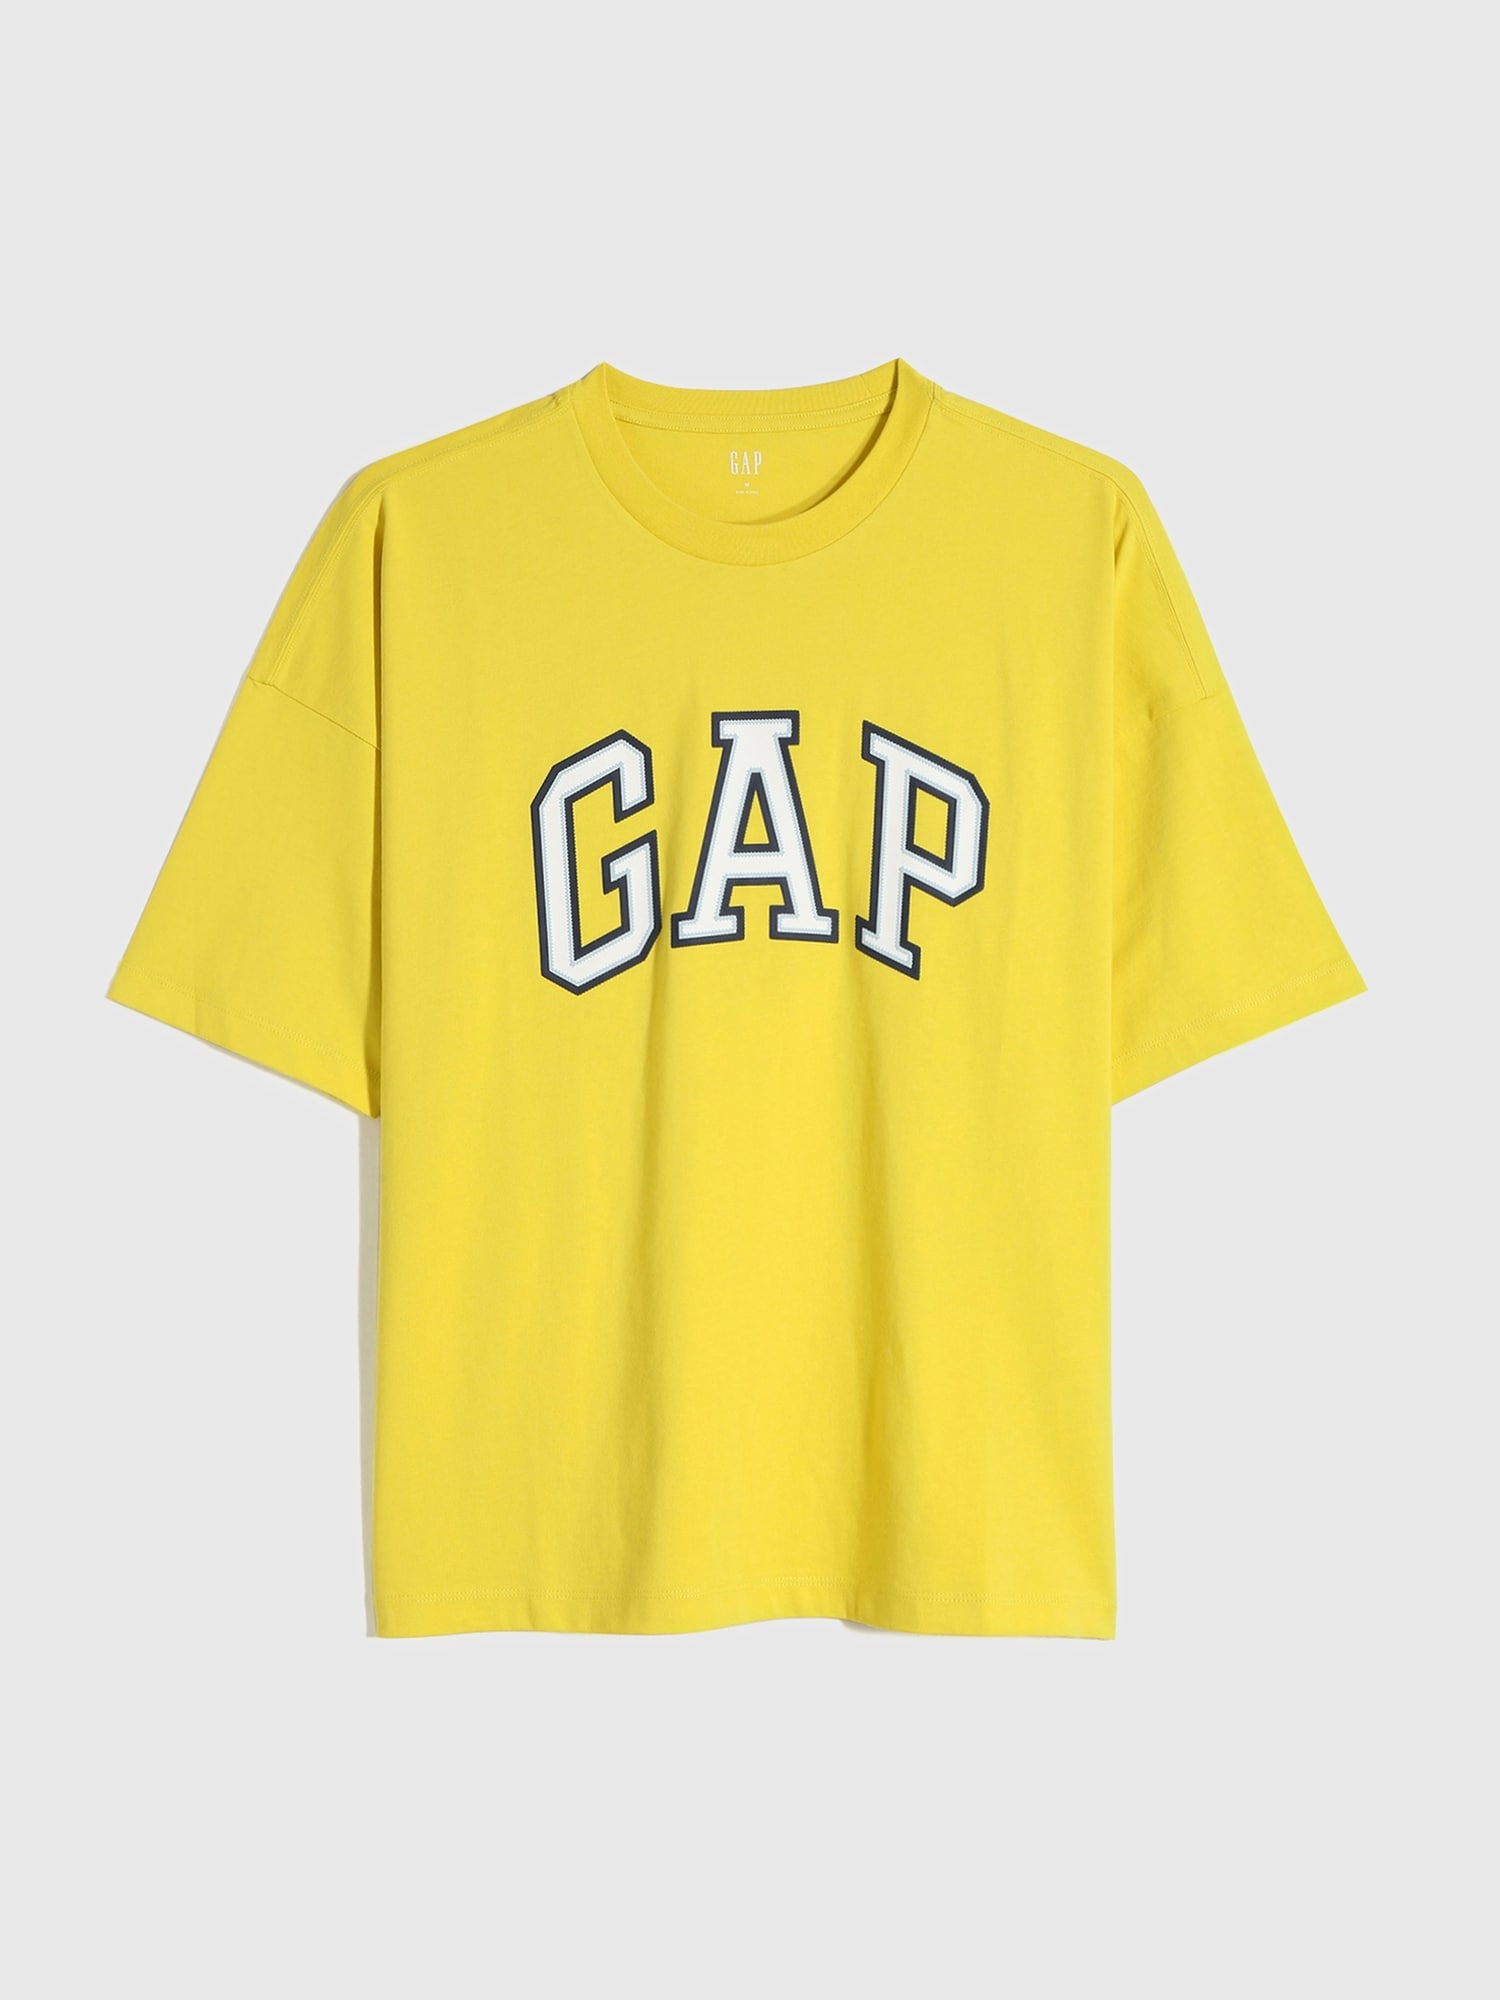 Gapロゴ クルーネックtシャツ